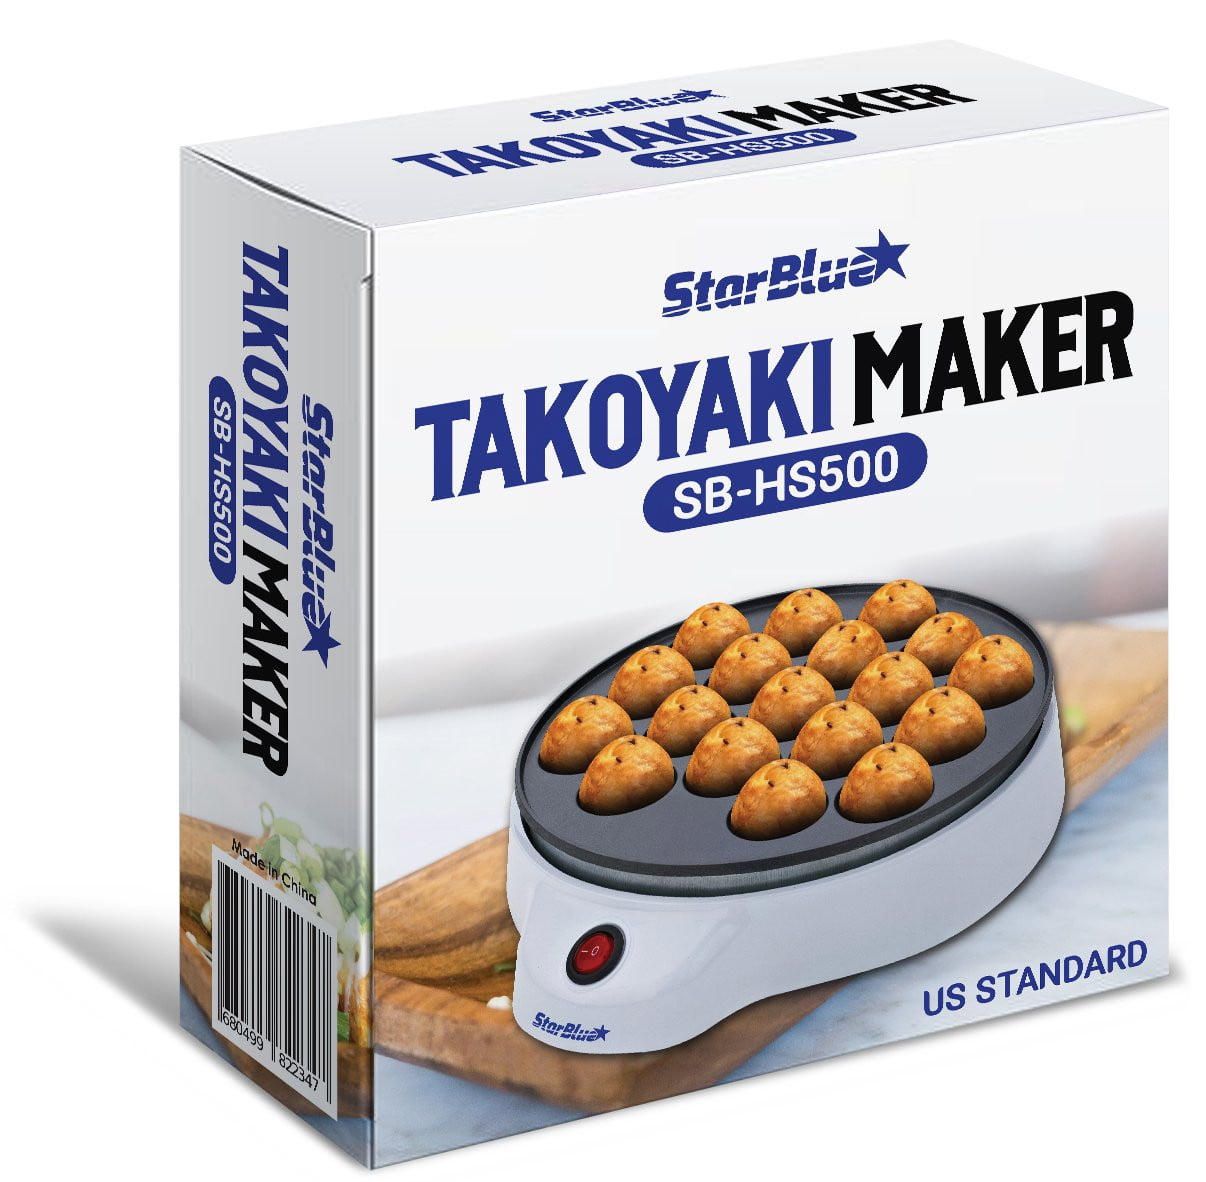 Electric Takoyaki Maker With Free Takoyaki Tools - Specialty